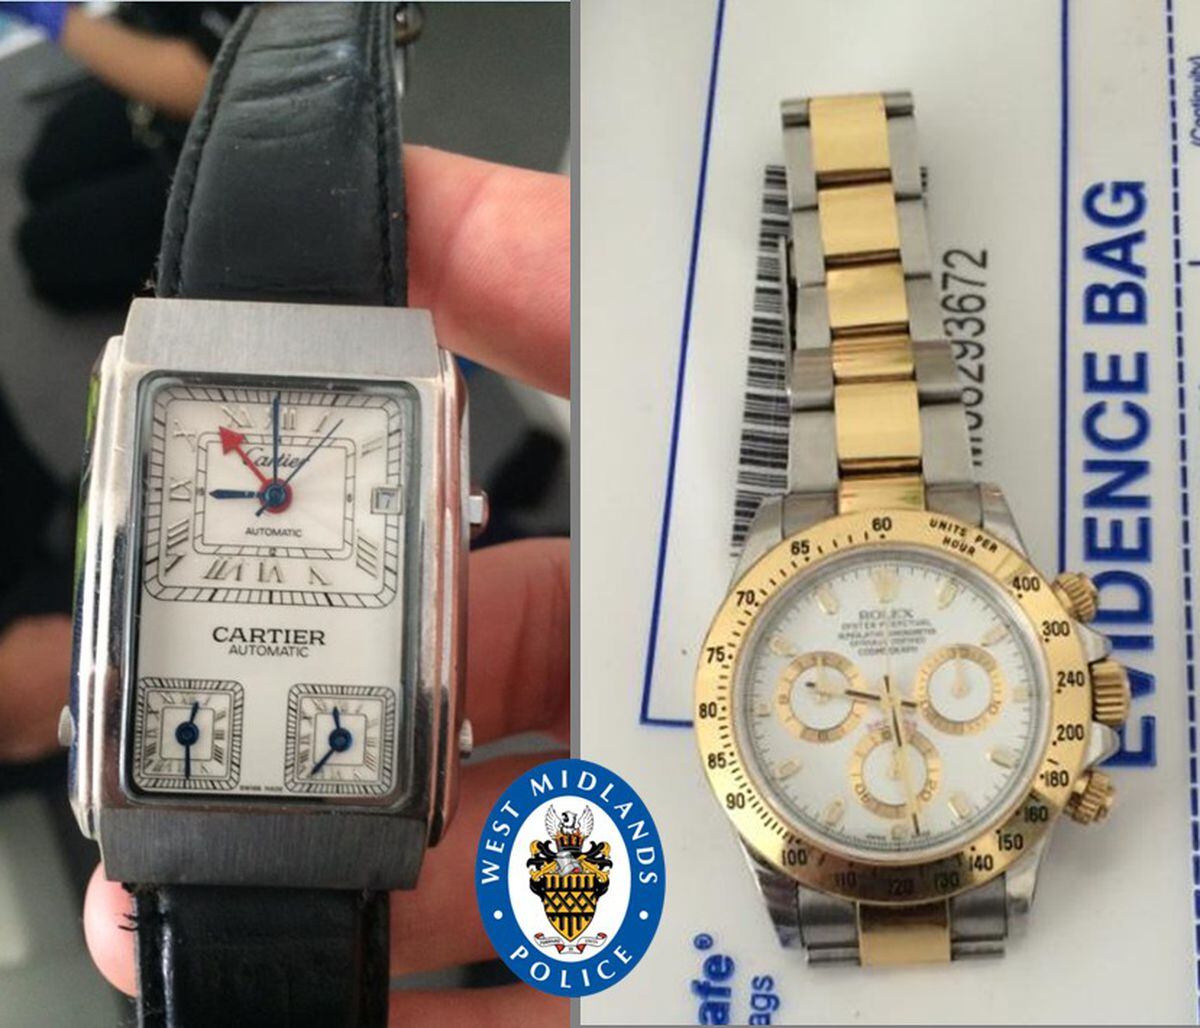 Seized - a Cartier watch and a Rolex